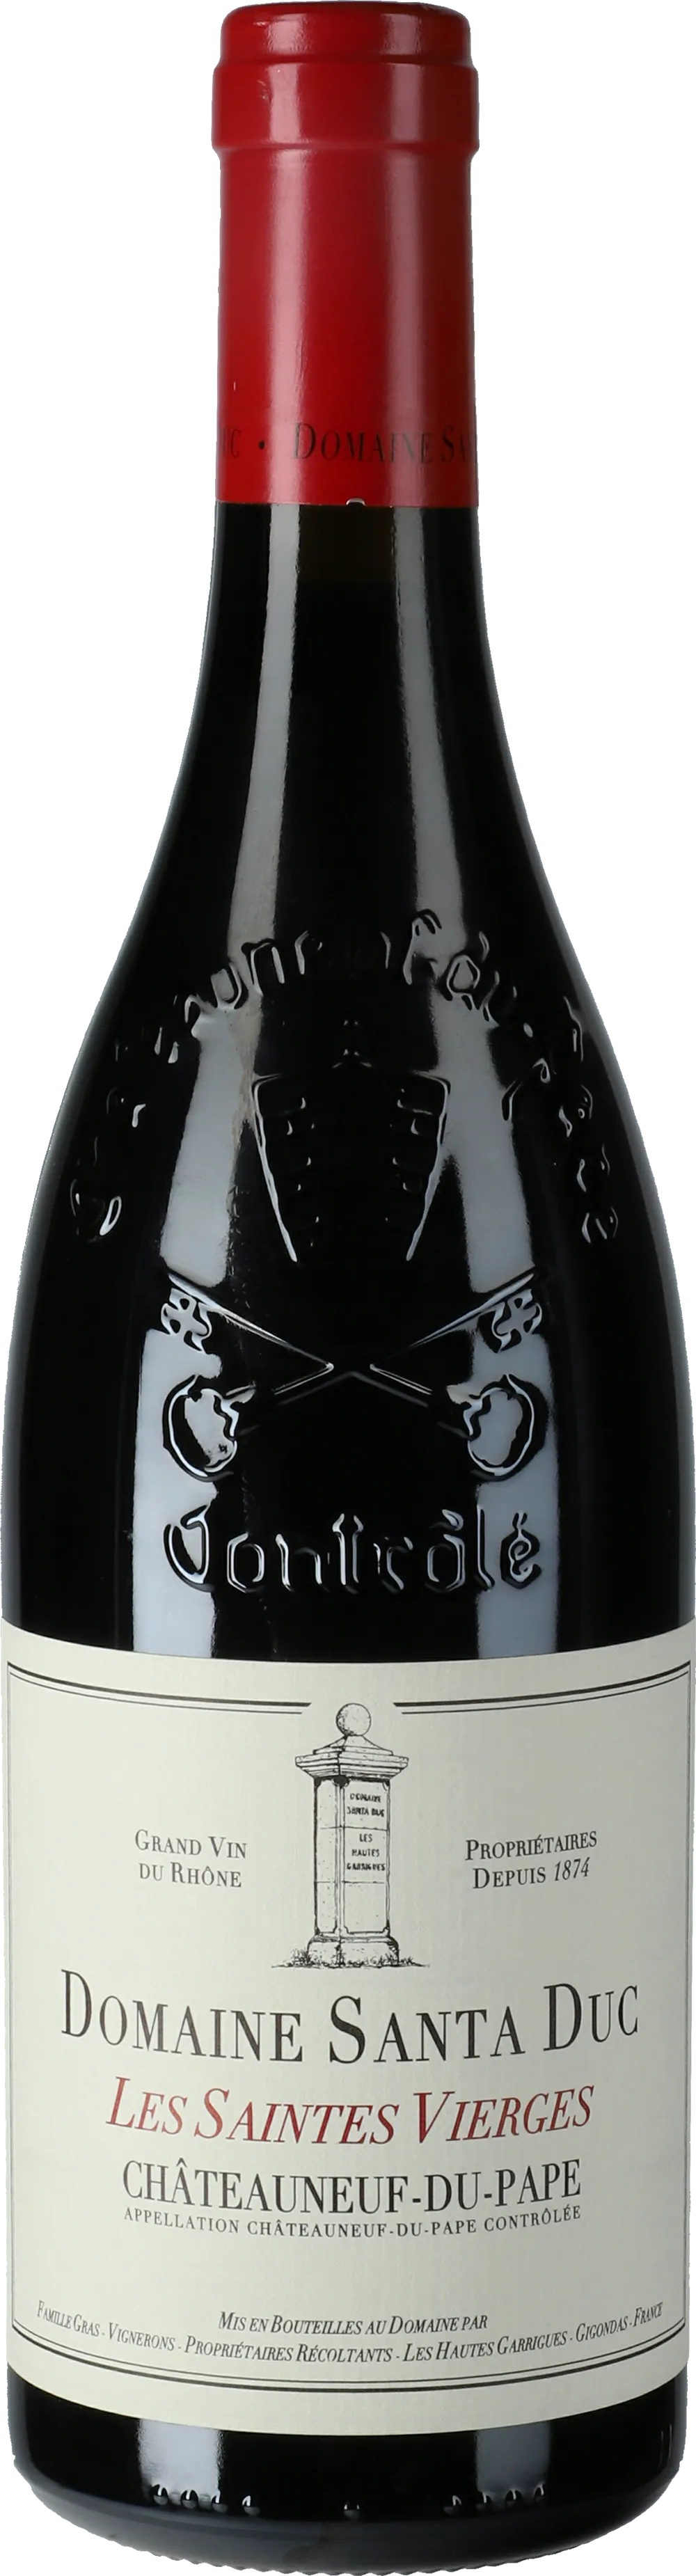 Bottle of Domaine Santa Duc Châteauneuf du Pape 'Les Saintes Vierges' from search results